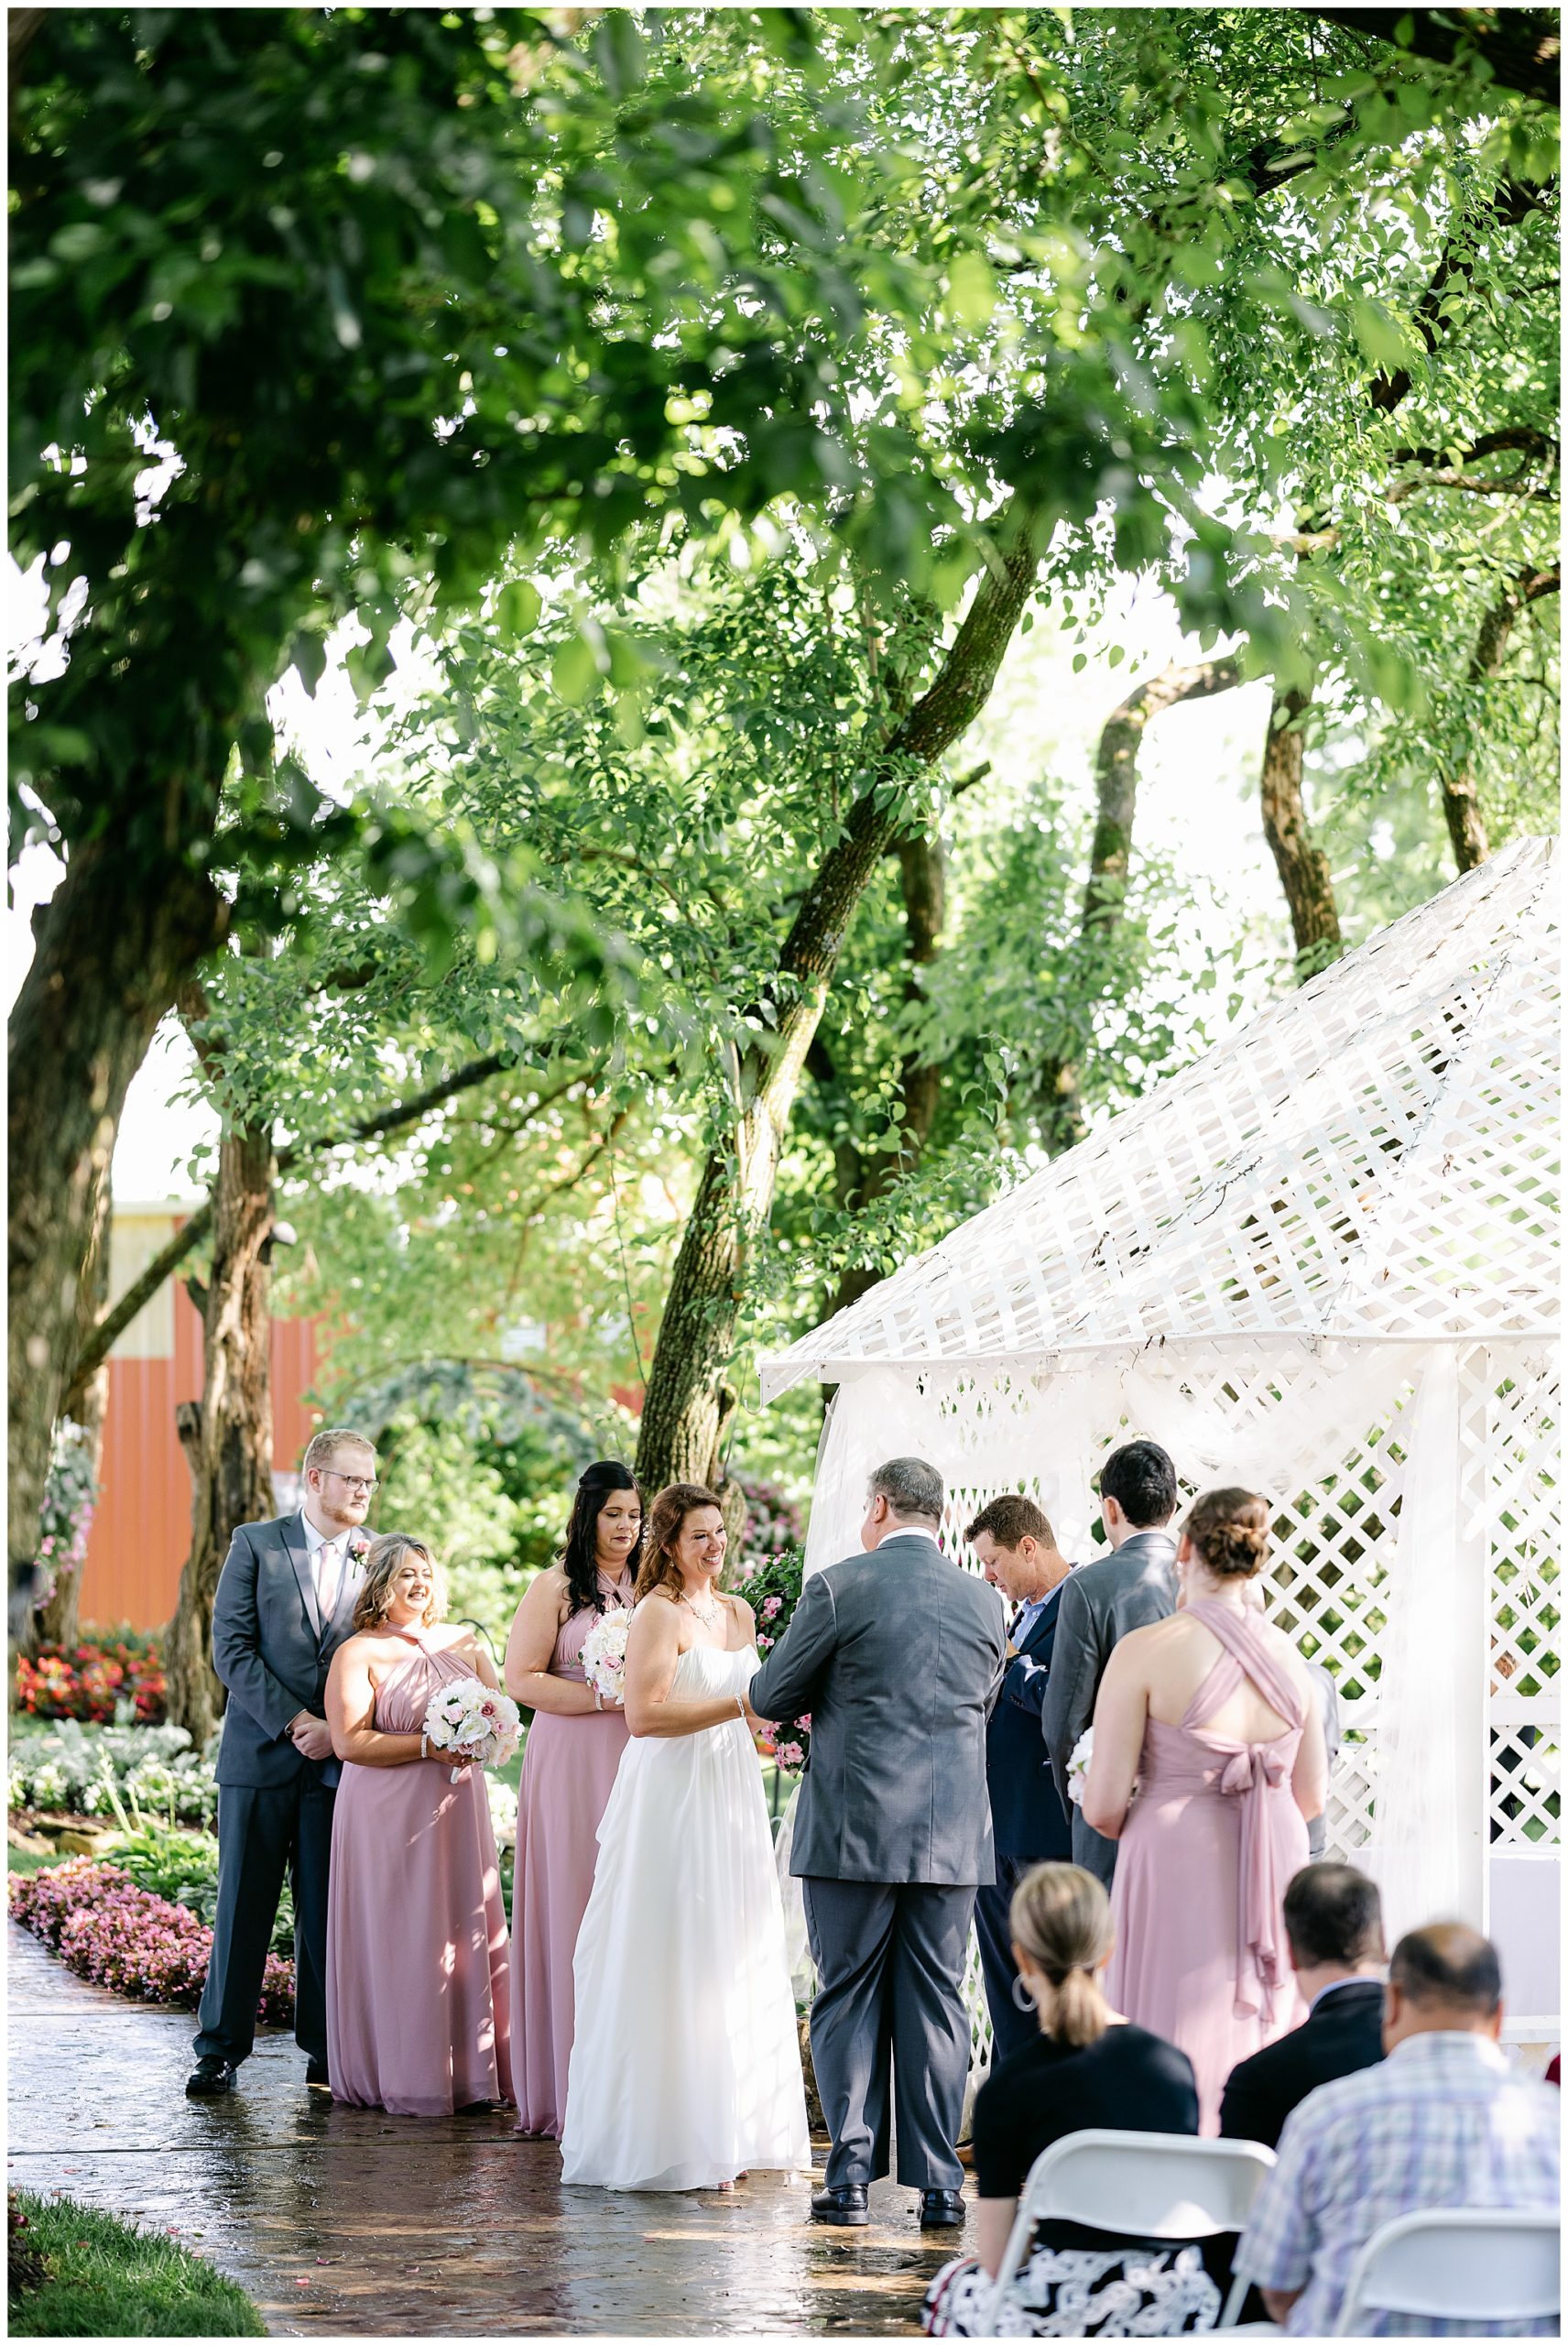 enright gardens wedding